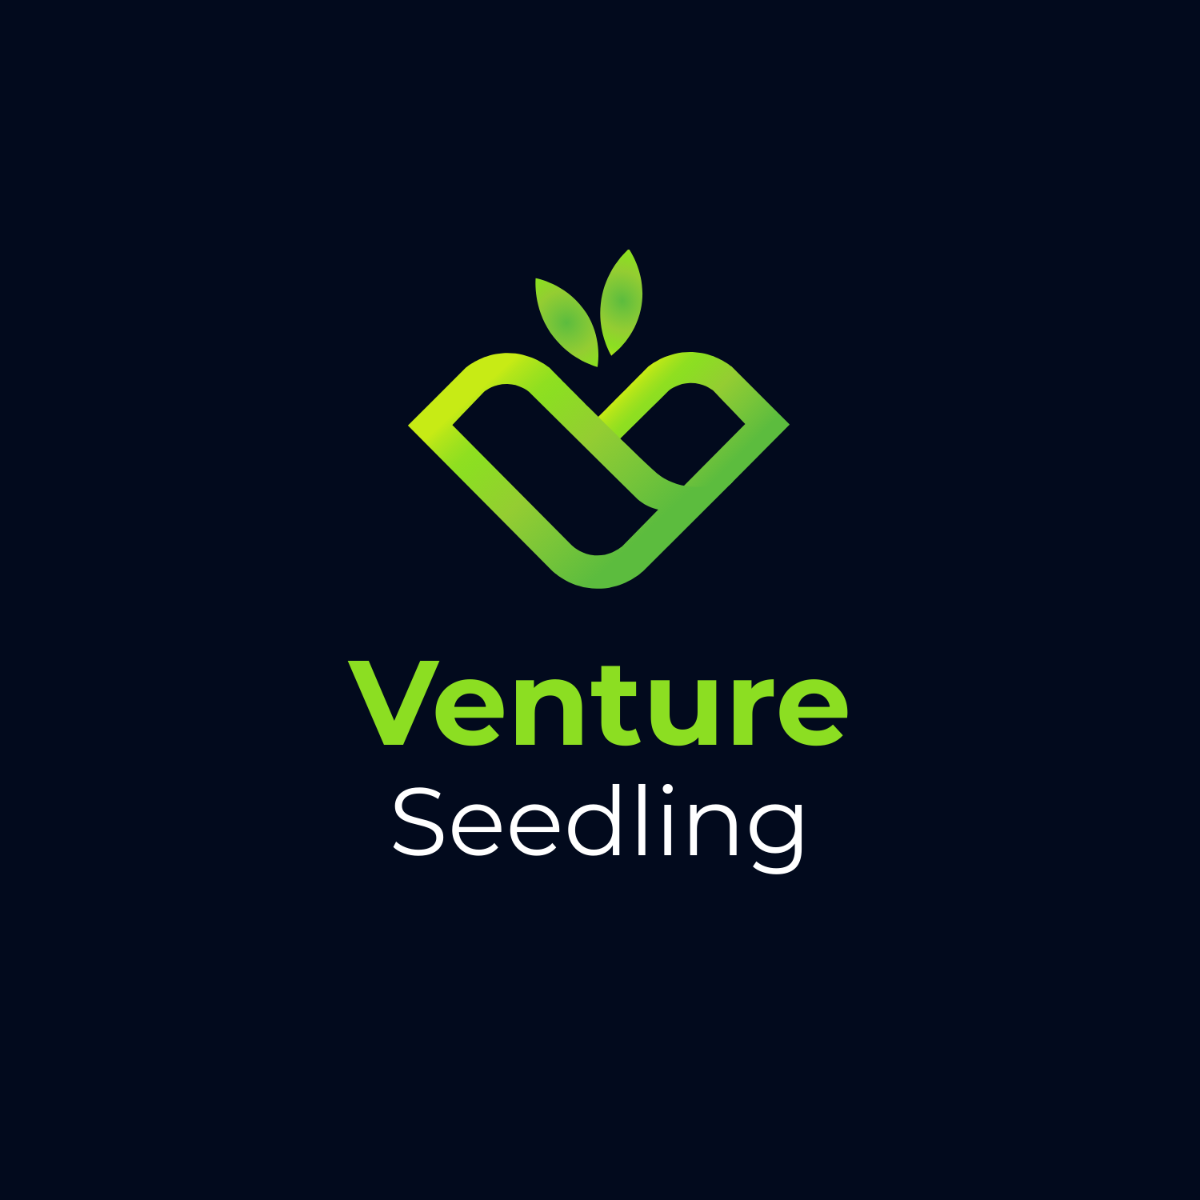 Venture Seedling Logo Template